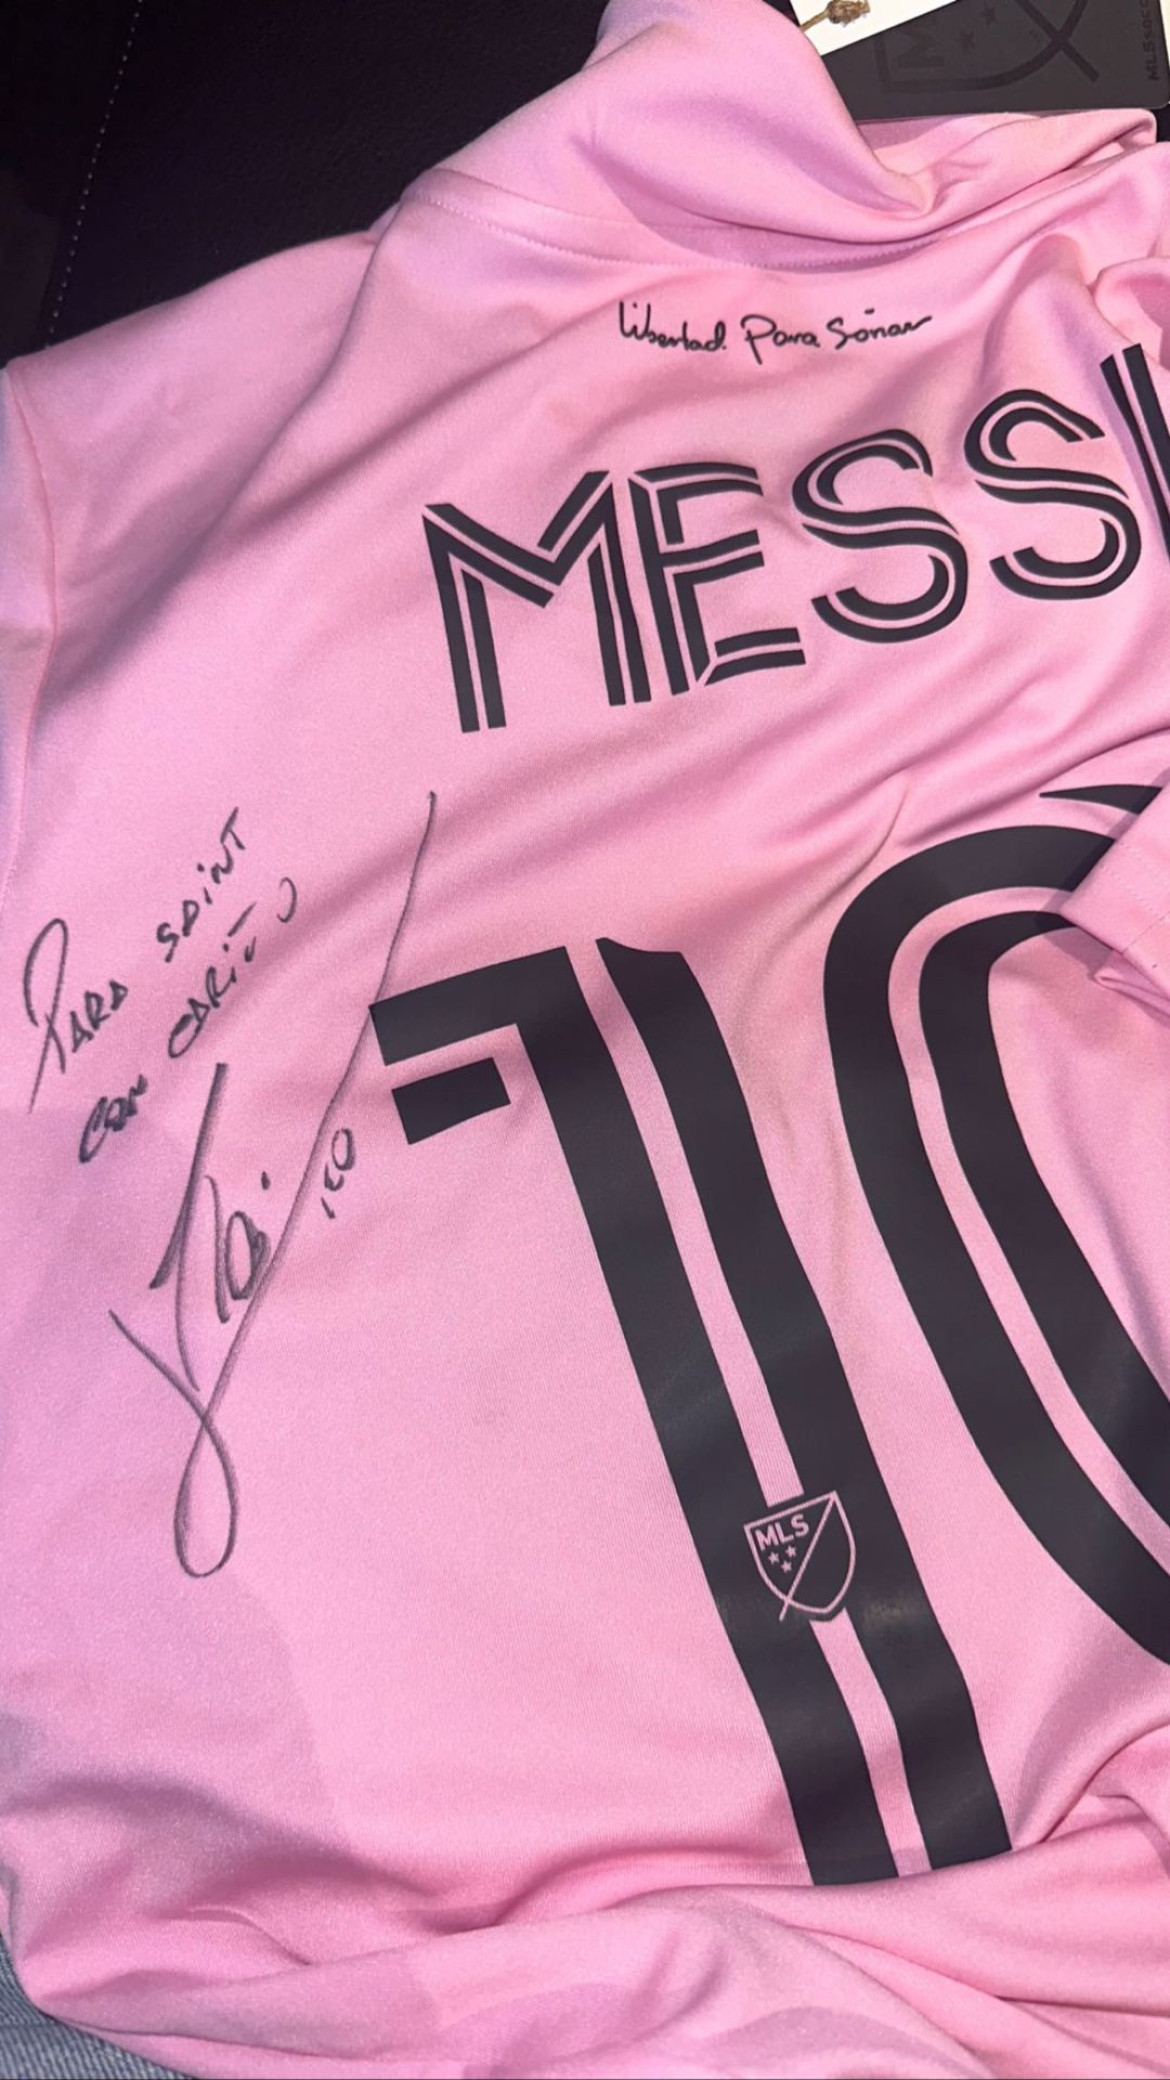 Lionel Messi le regaló una camiseta a un hijo de Kim Kardashian. Foto: Instagram @kimkardashian.